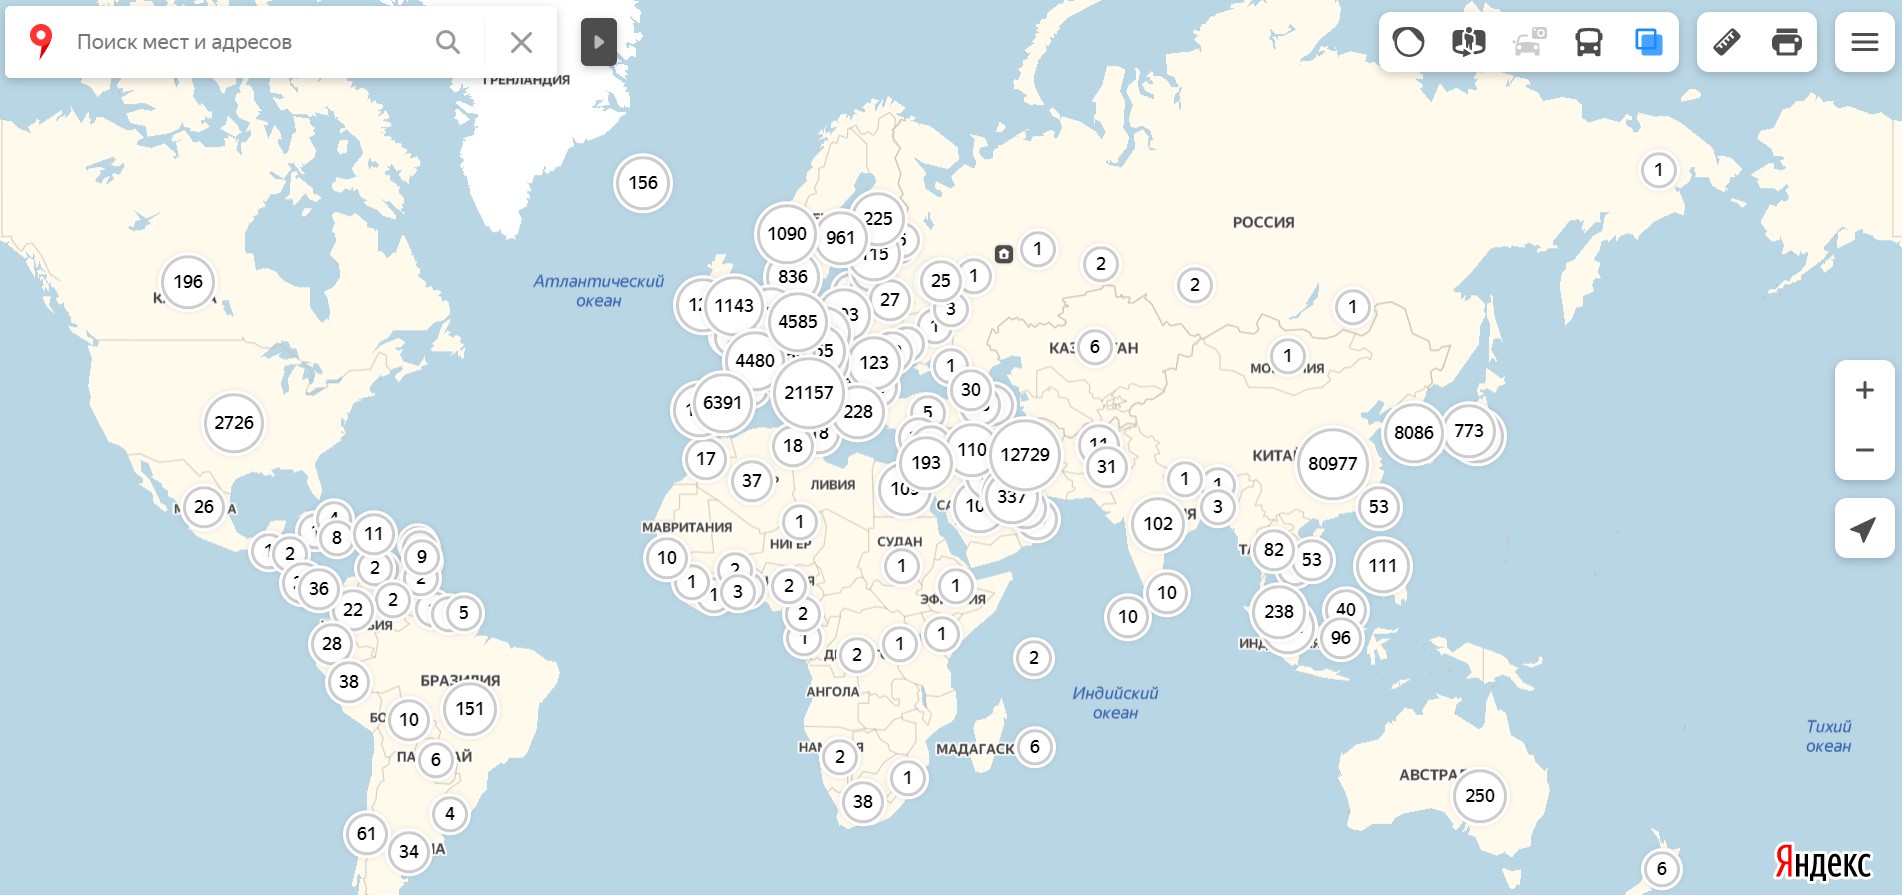 «Яндекс» представила онлайн-карту коронавируса